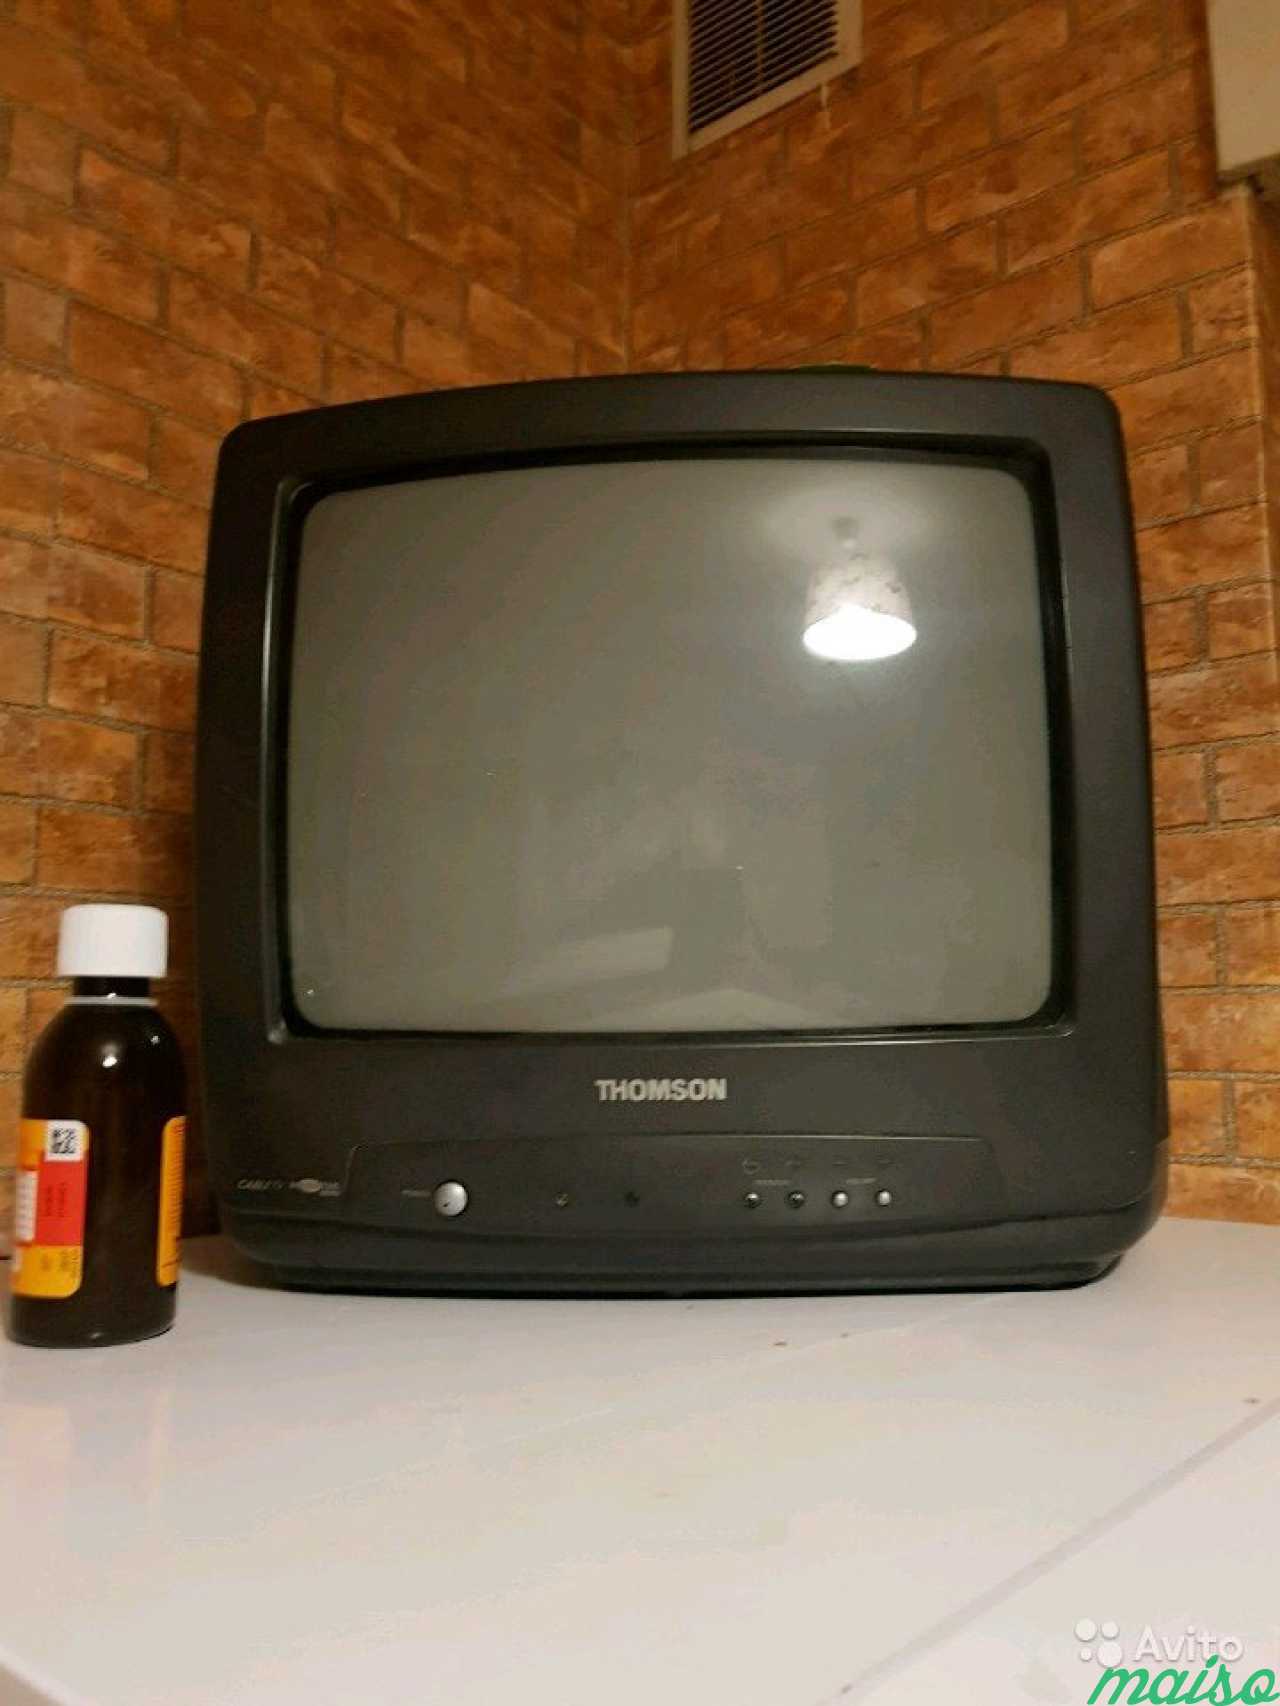 Дешевые телевизоры спб. Телевизор авито. Самый маленький дешевый телевизор за 500 рублей. Телевизор СПБ. Авито телевизоры б/у.